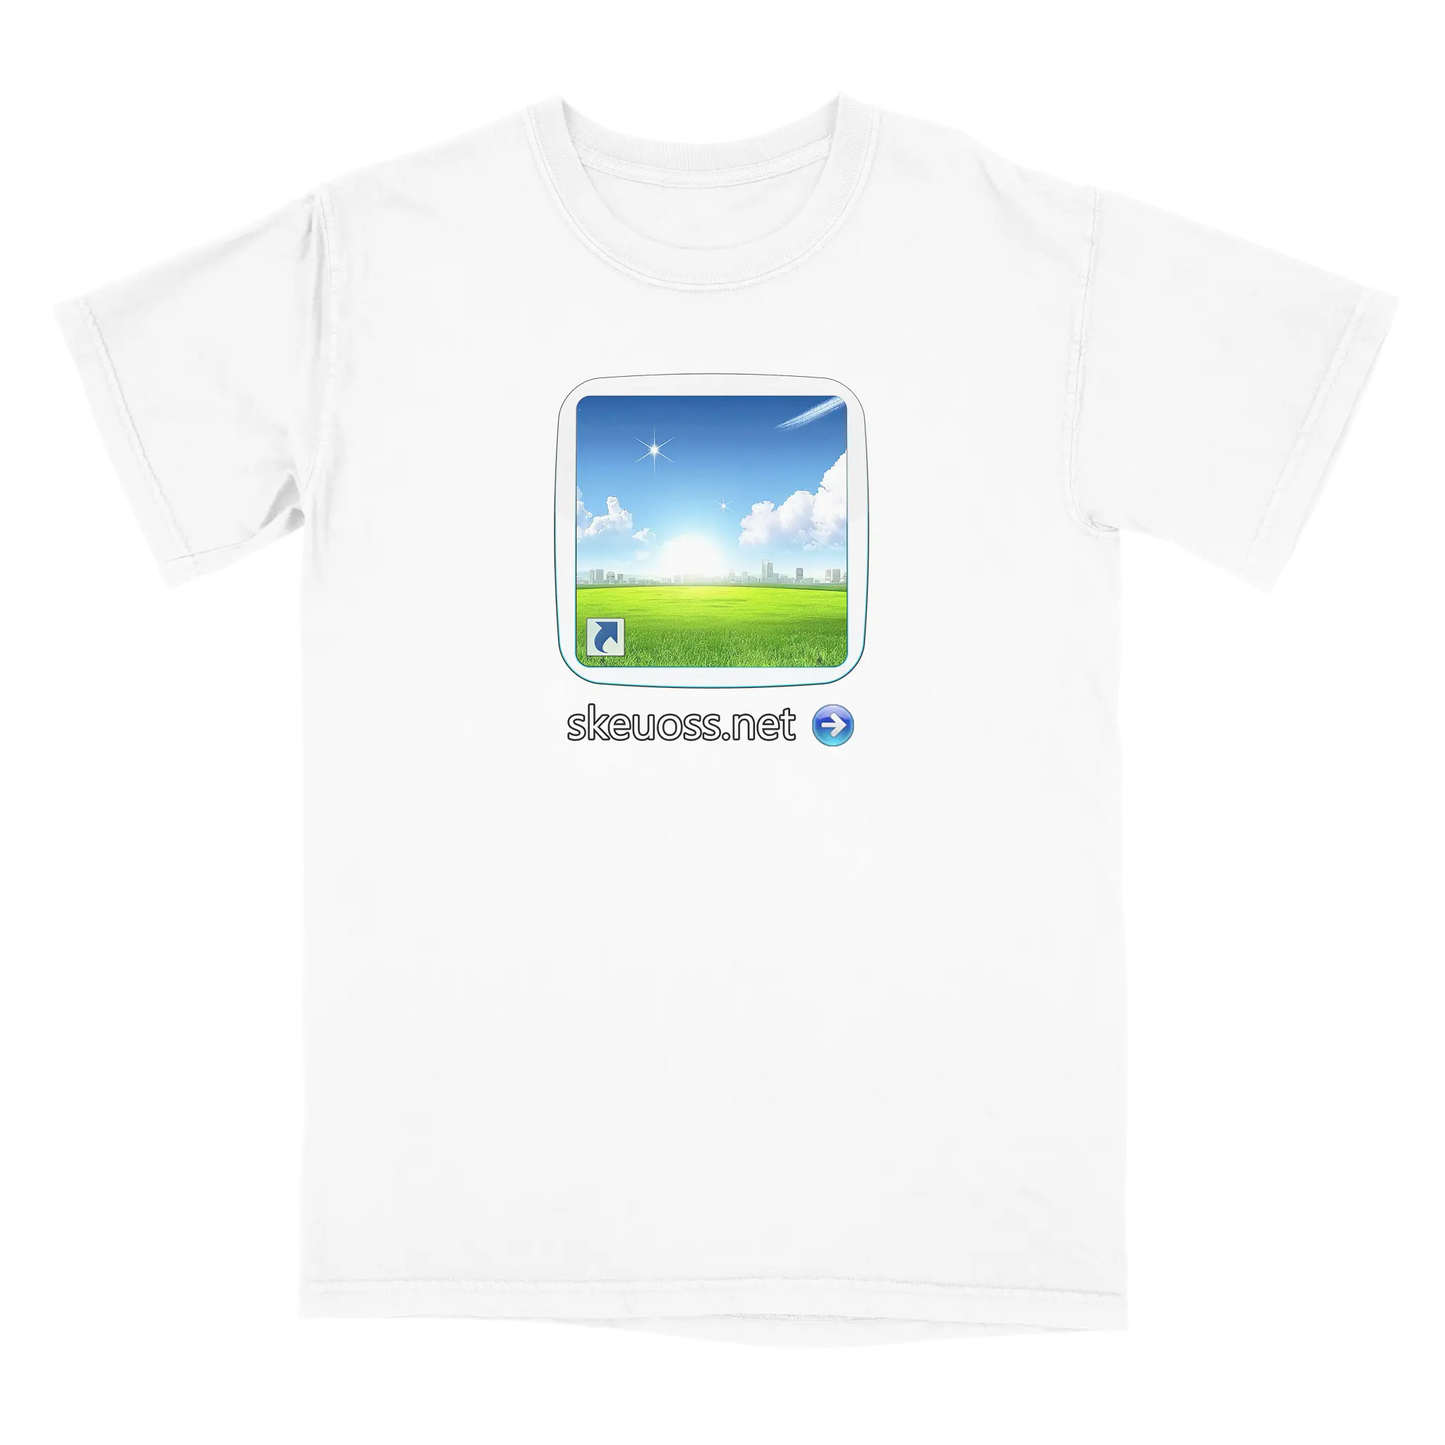 Frutiger Aero T-shirt - User Login Collection - User 314